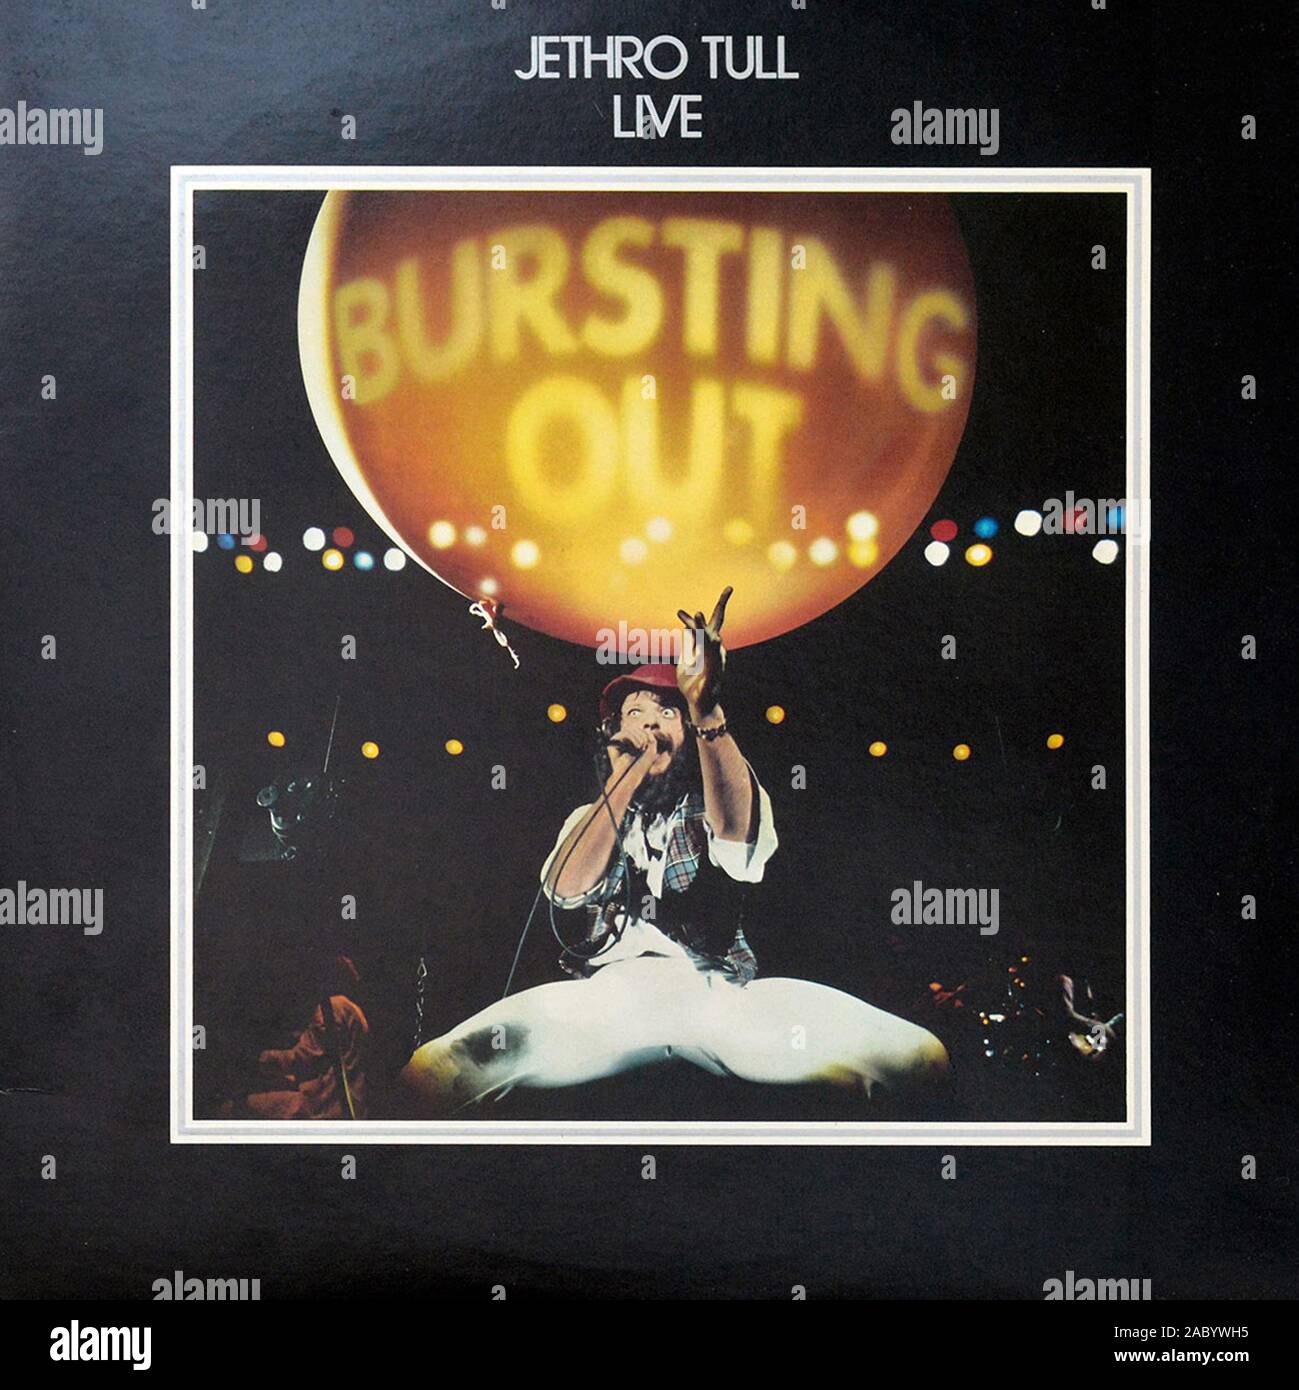 JETHRO TULL Live - Bursting Out - Vintage vinyl album cover Stock Photo -  Alamy